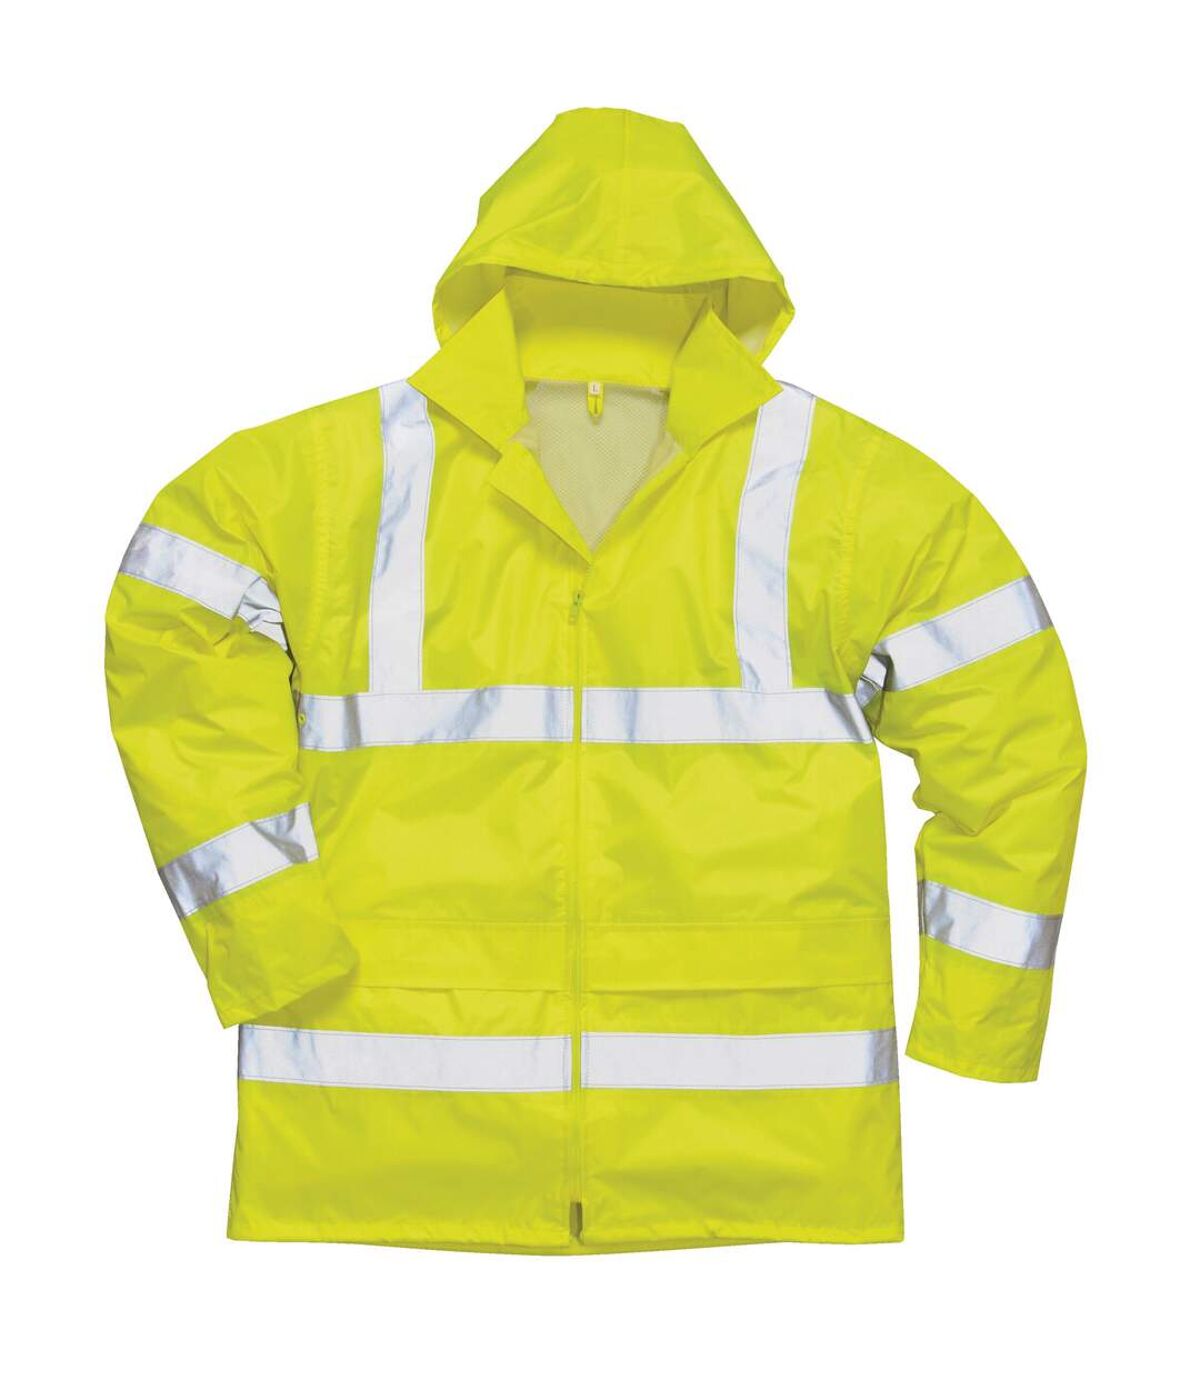 Portwest Hi-Vis Rain Jacket (H440) / Safetywear / Workwear (Yellow)